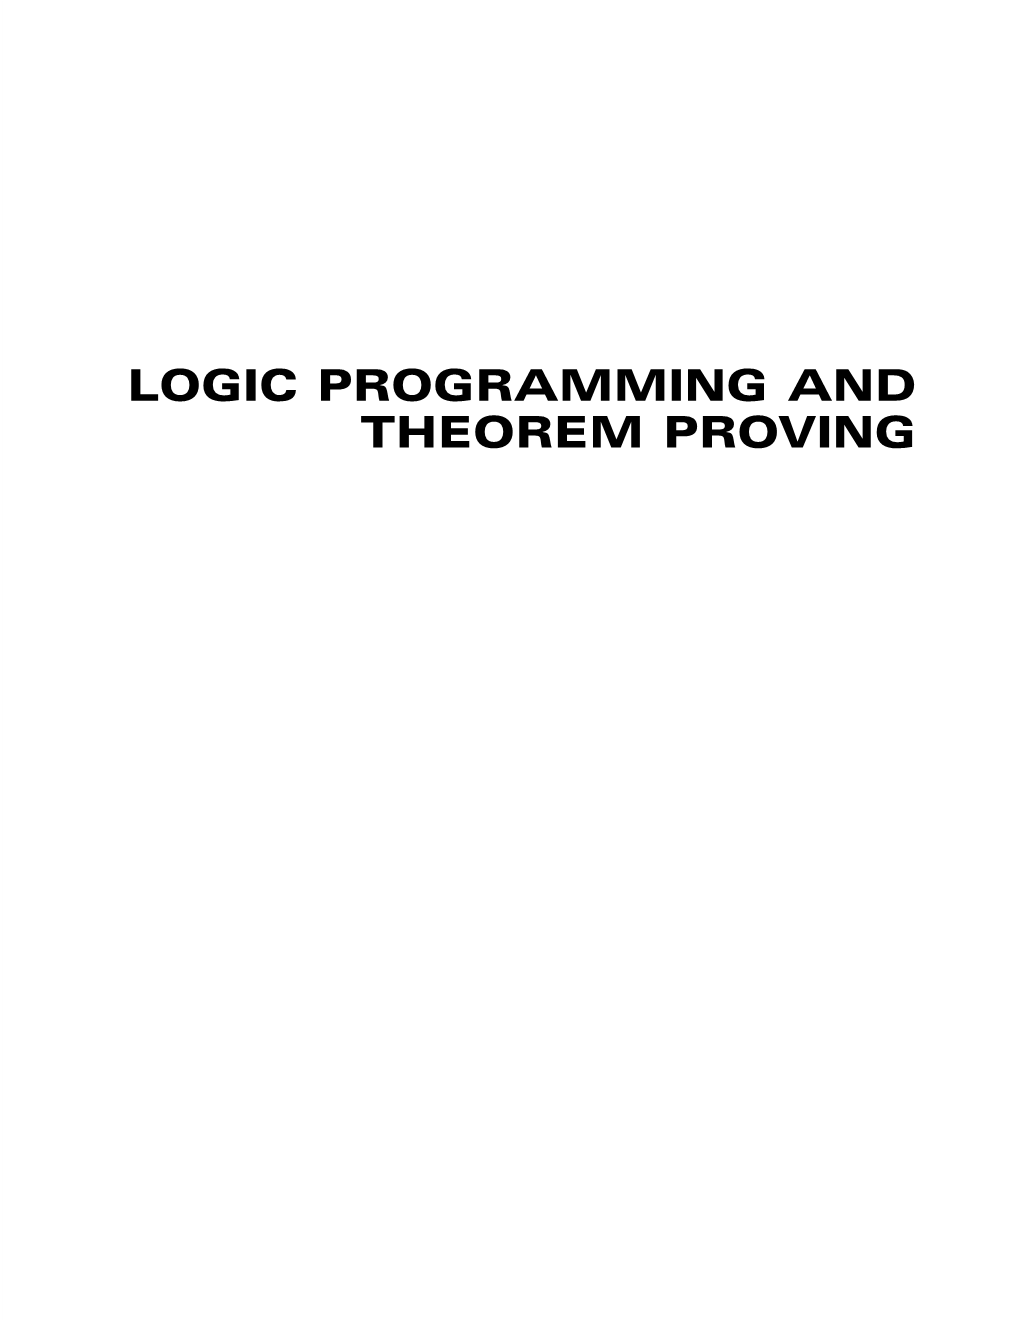 Logic Programming and Theorem Proving